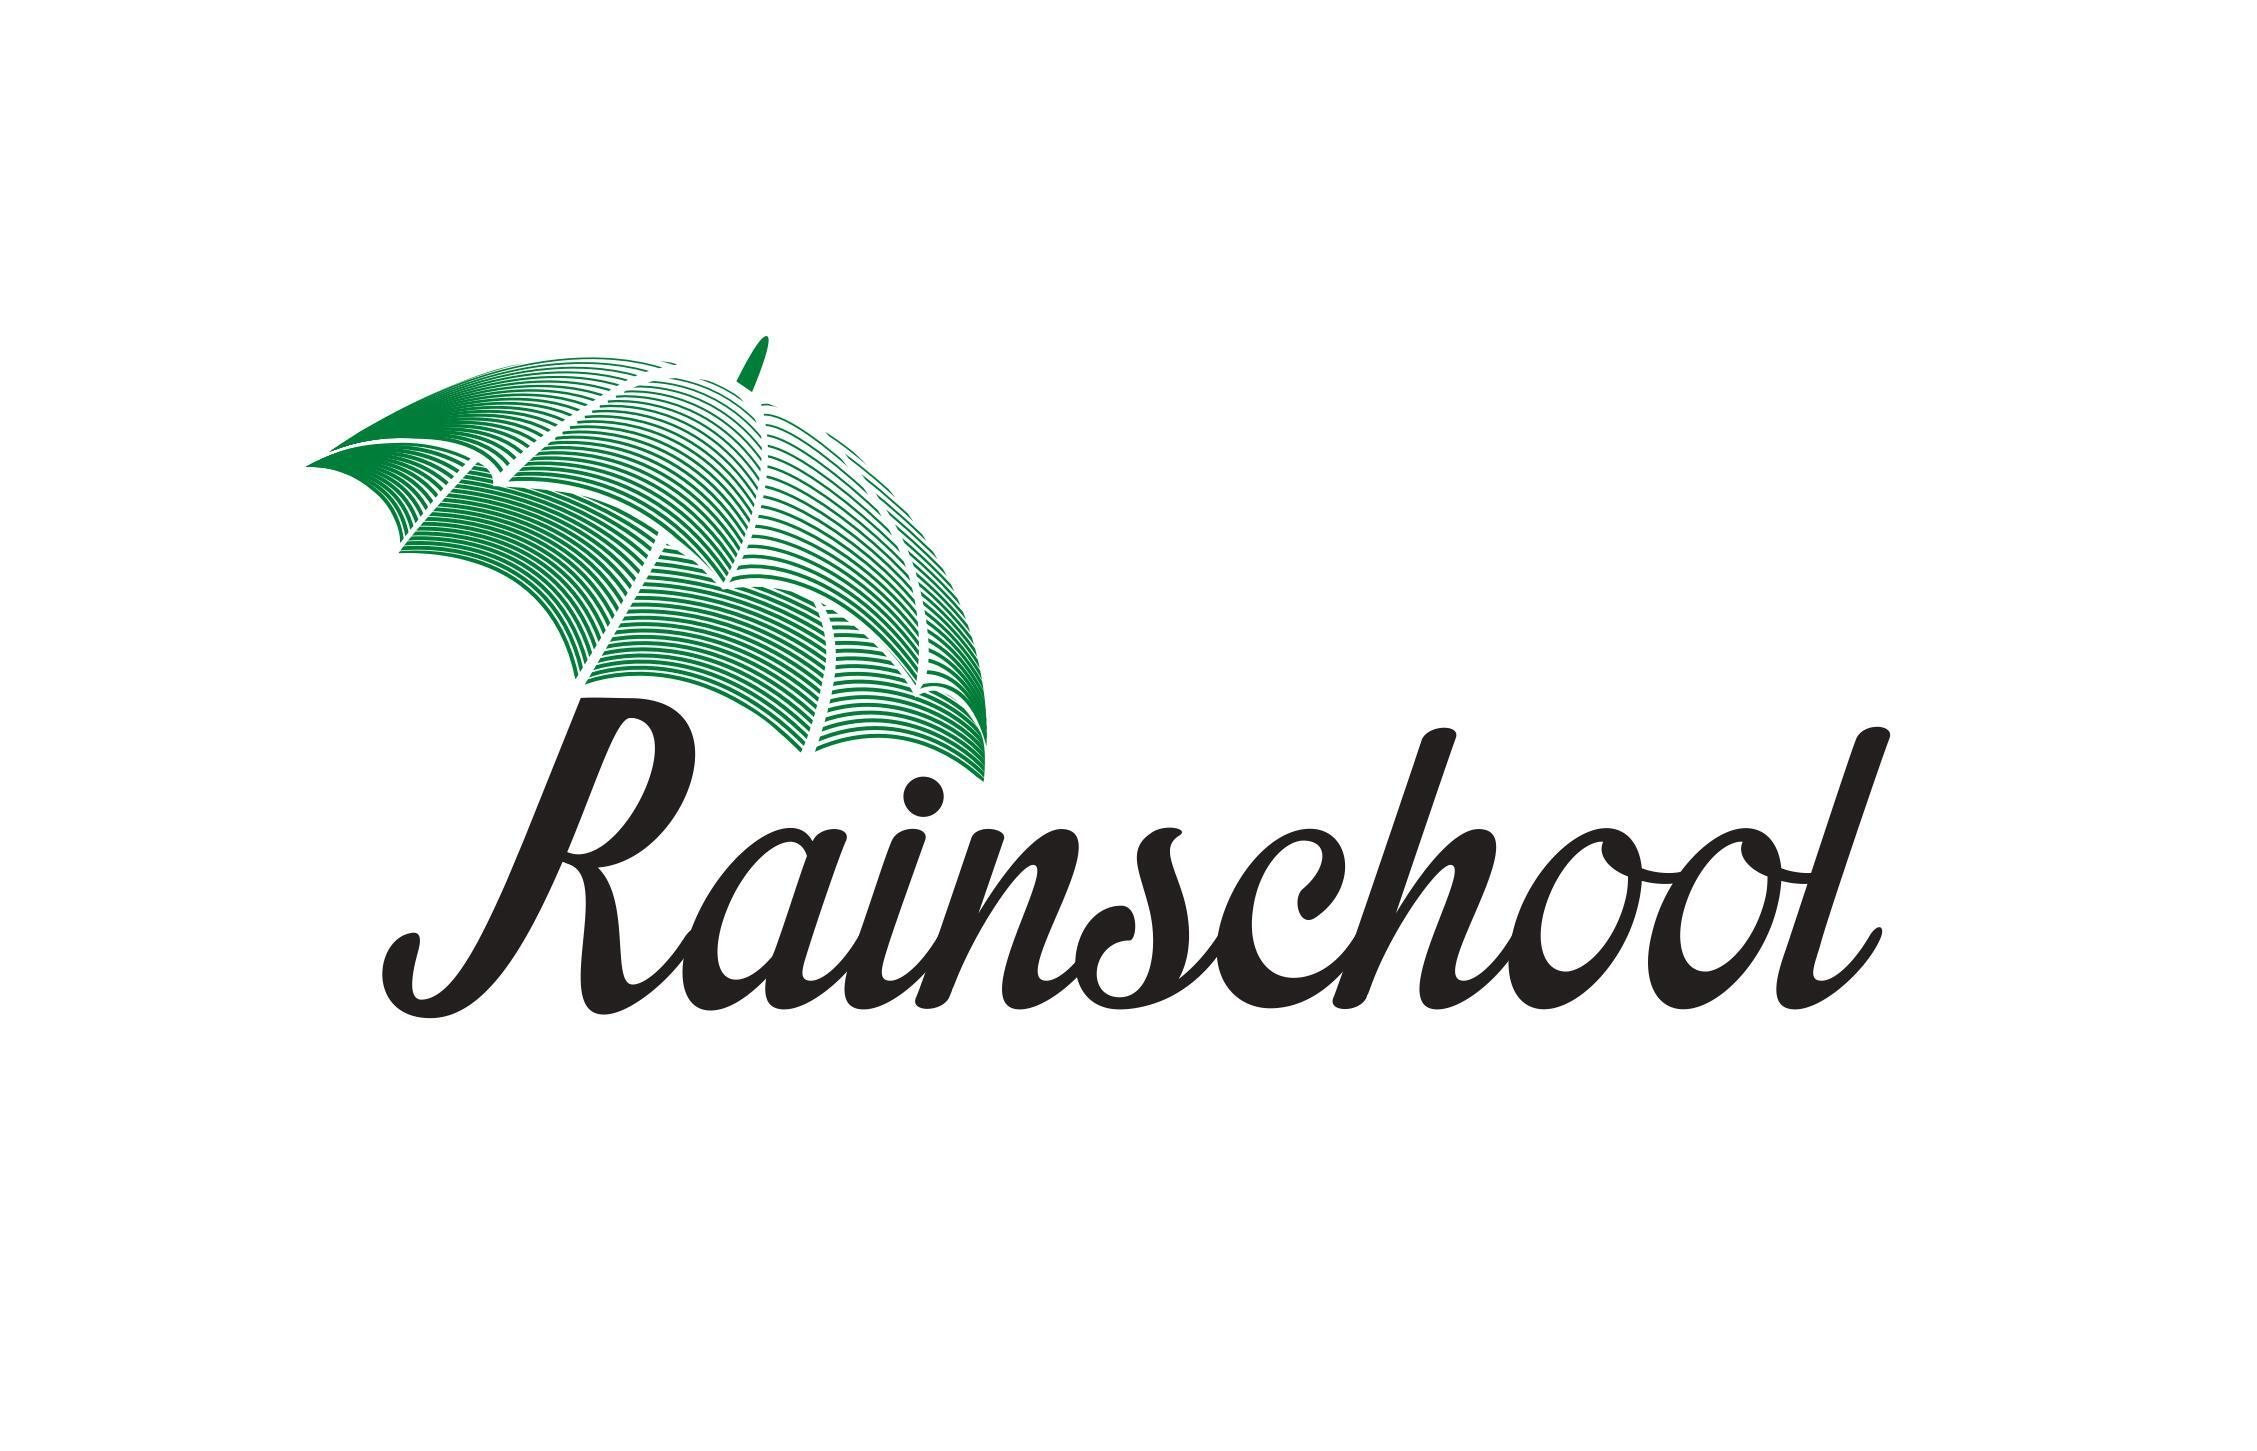 RAIN SCHOOL